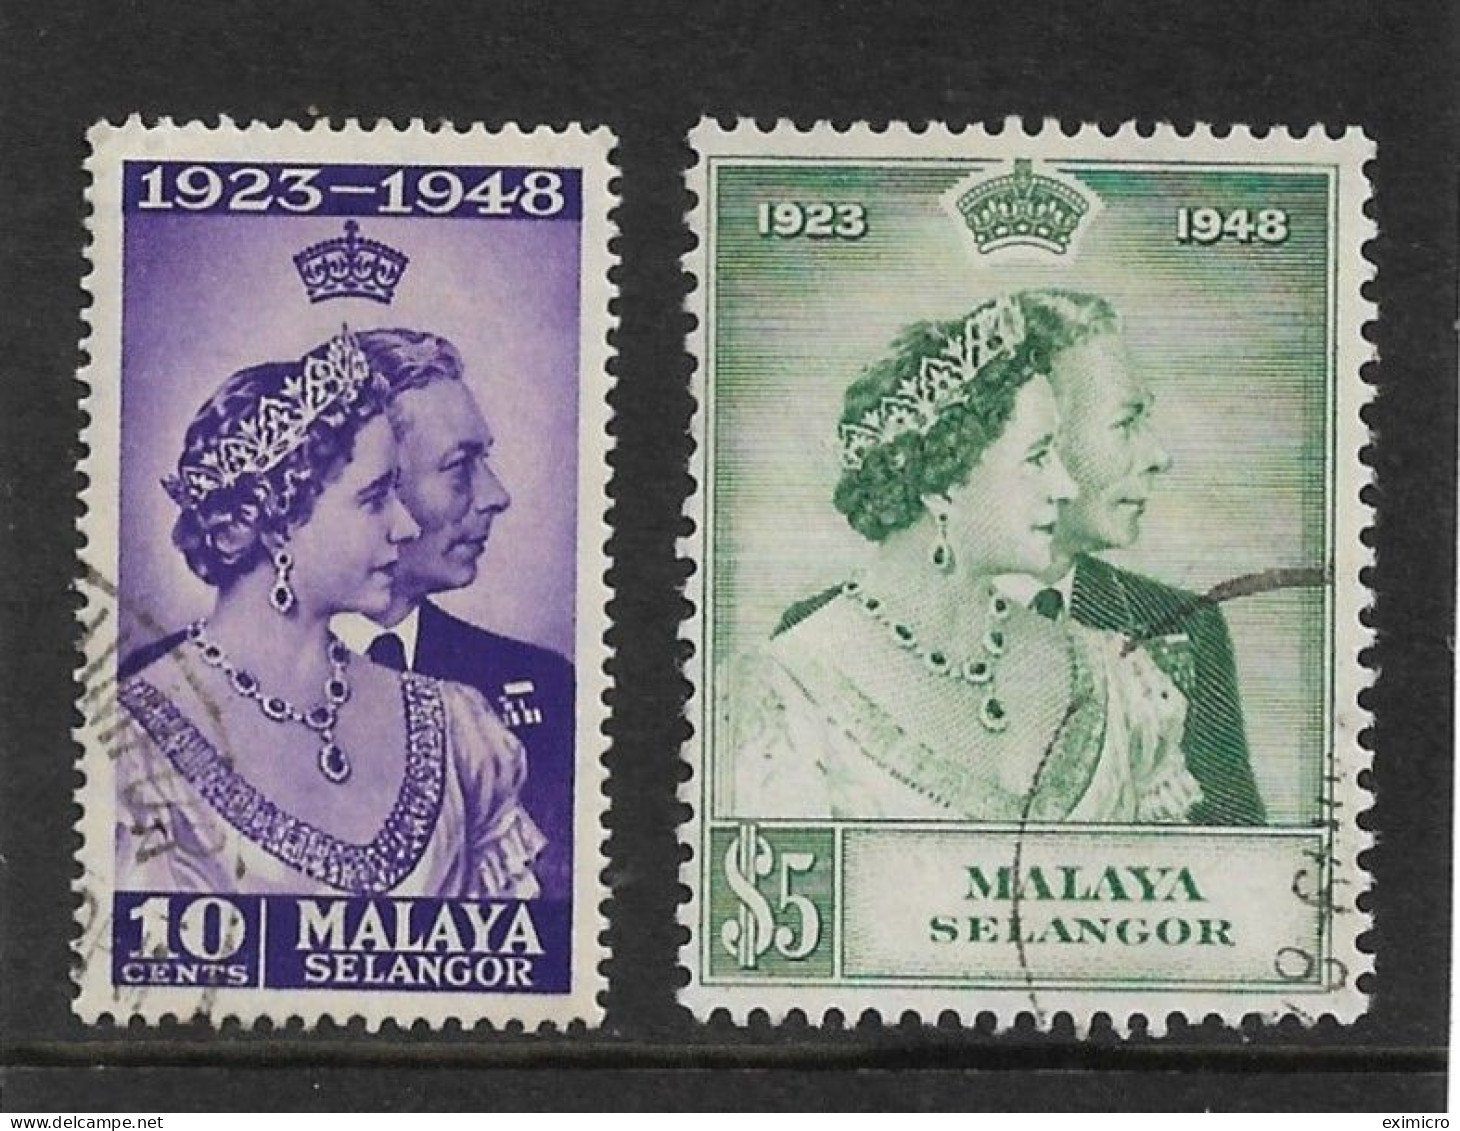 MALAYA - SELANGOR 1948 SILVER WEDDING SET FINE USED Cat £25+ - Selangor